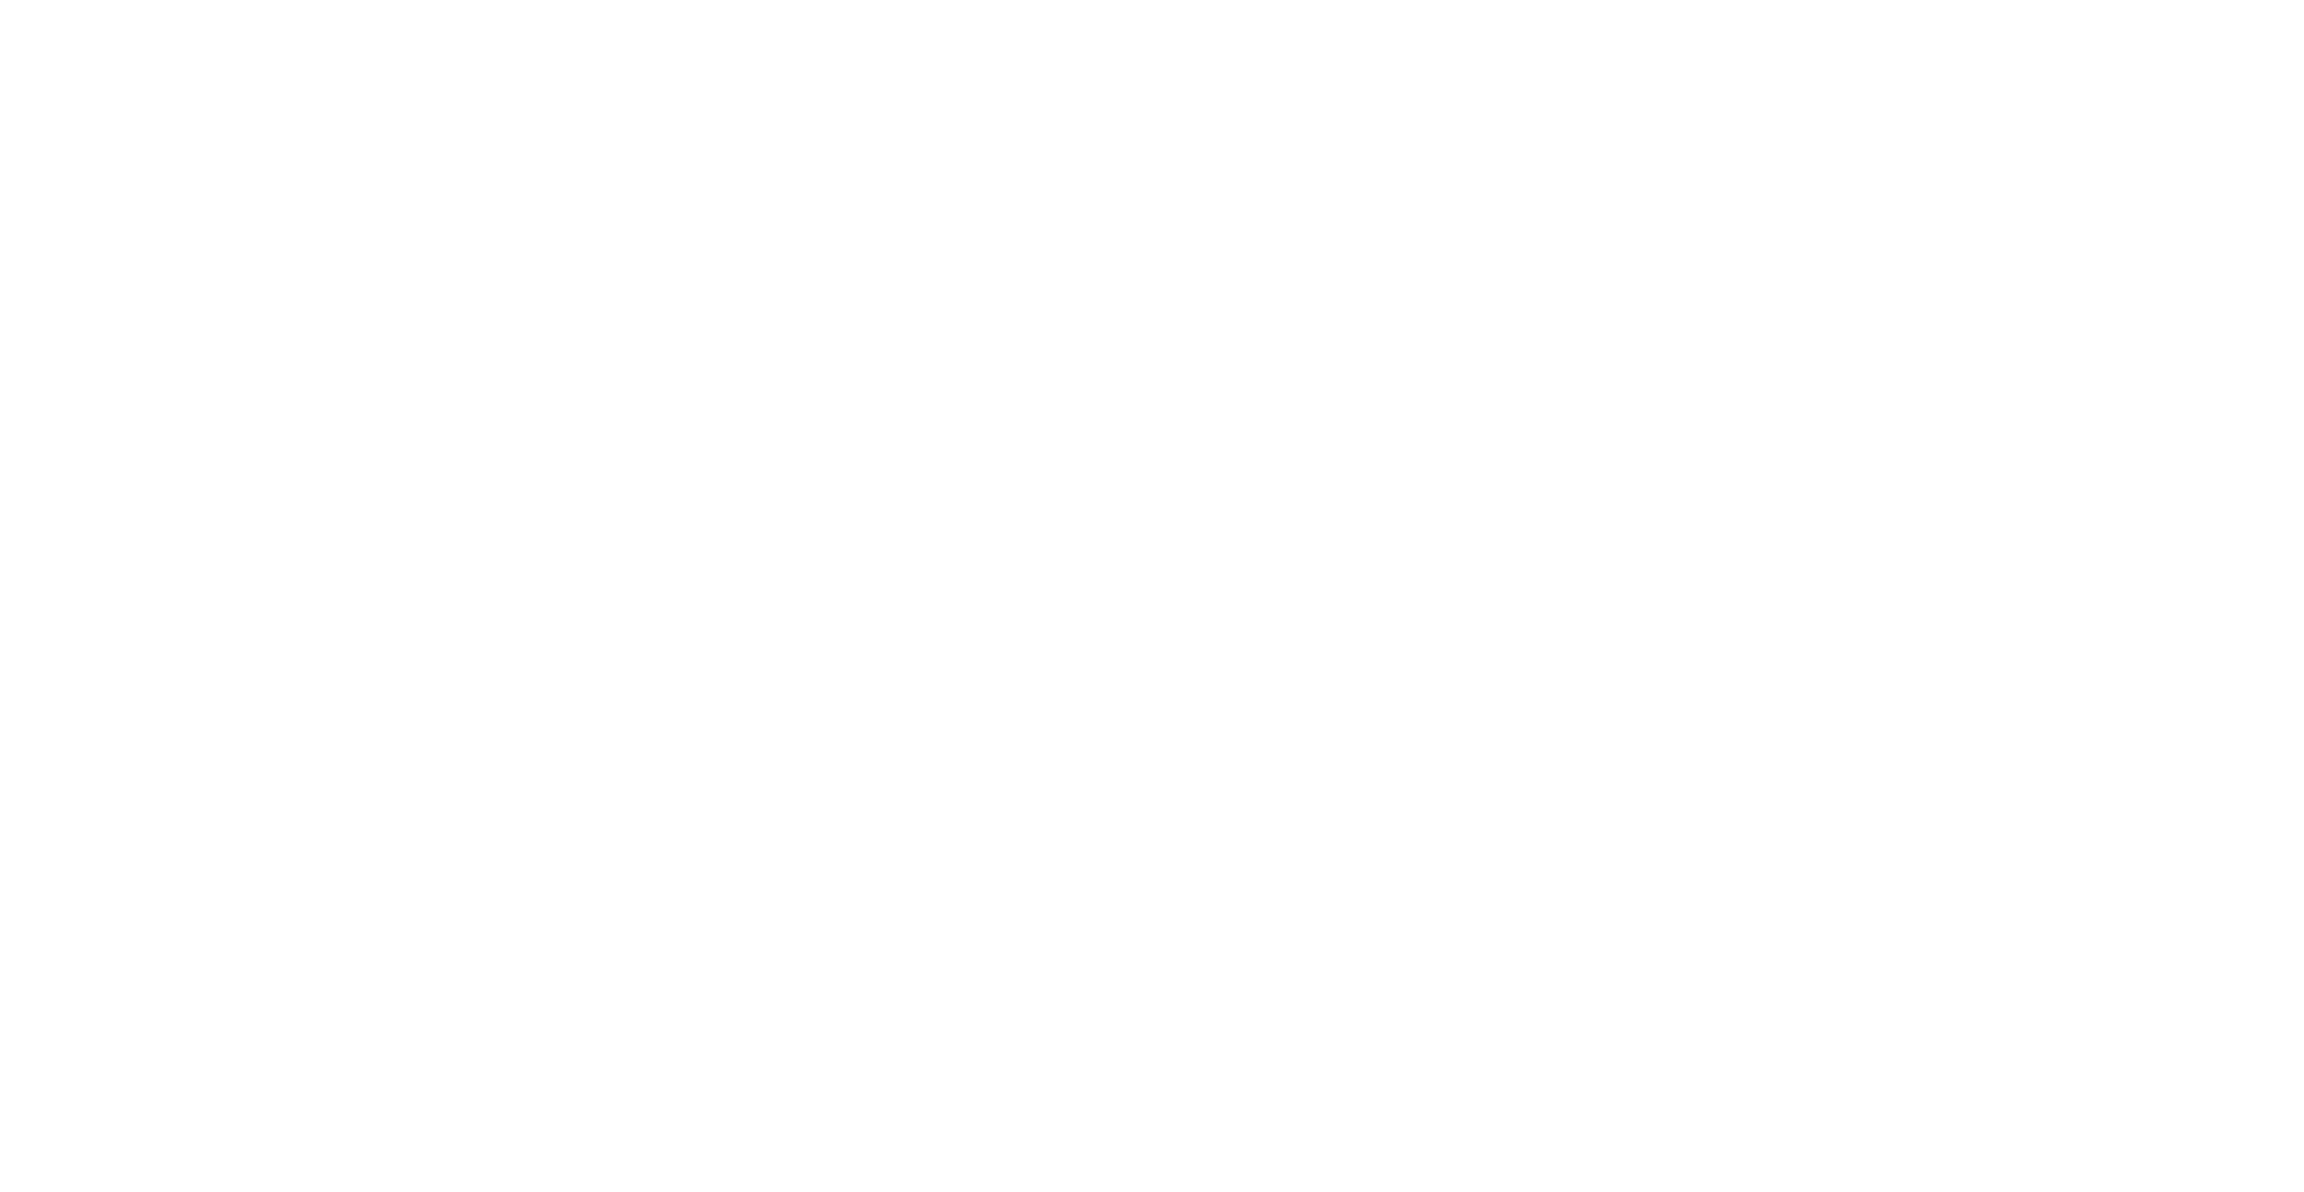 An Optical Illusion logo